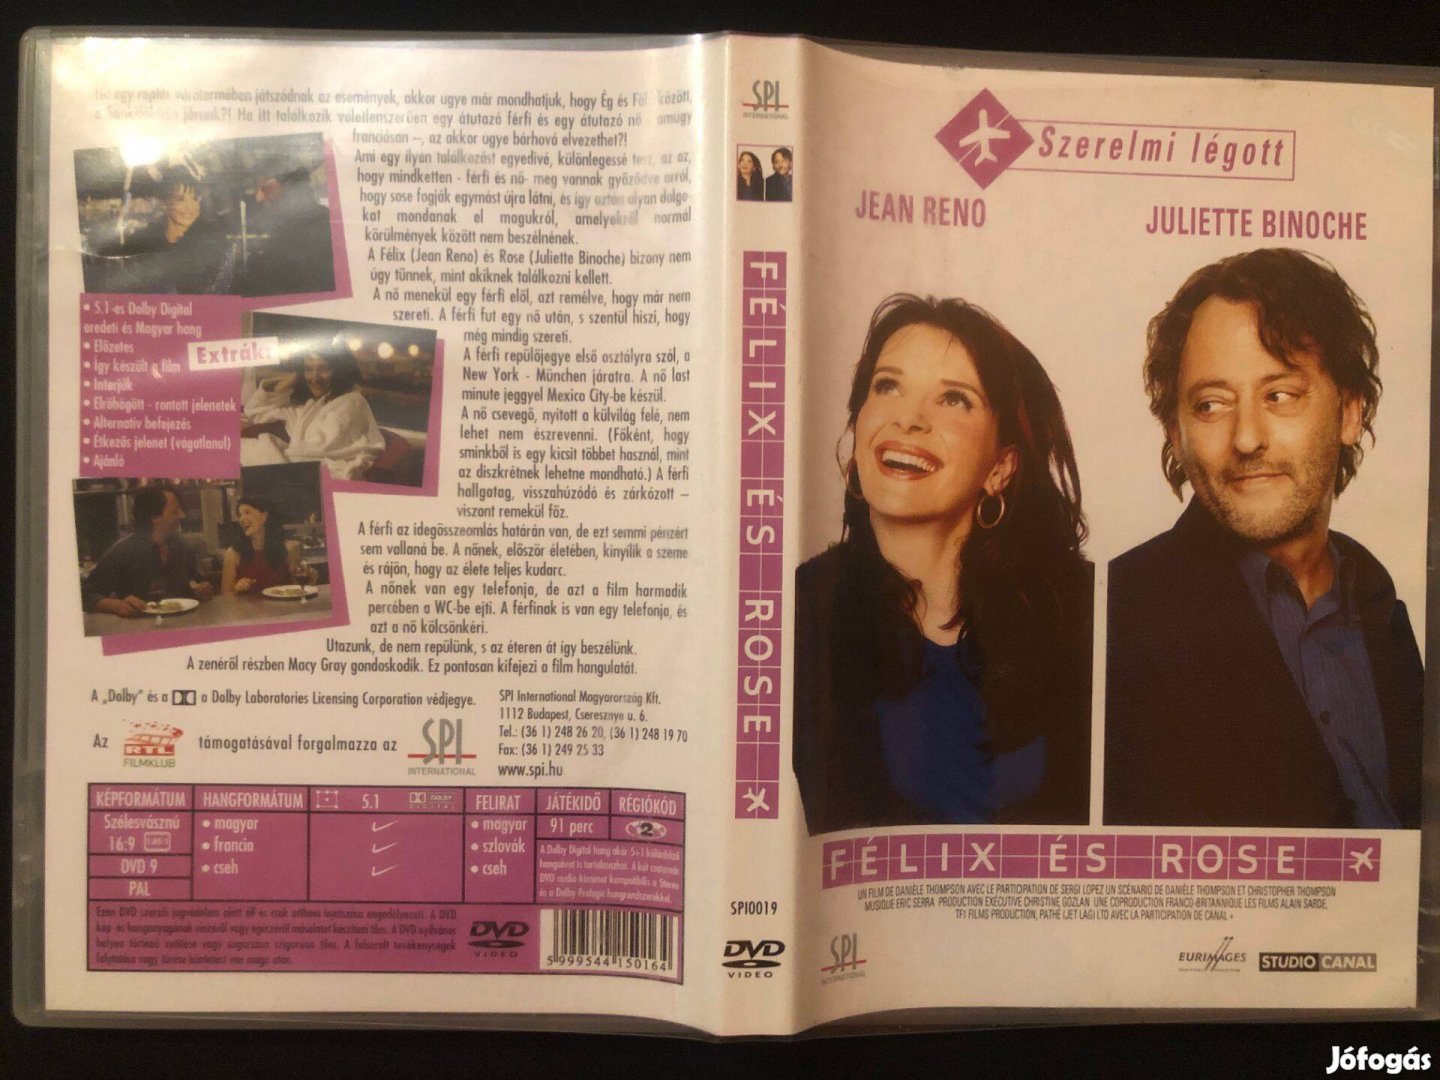 Félix és Rose DVD (Jean Reno, Juliette Binoche)